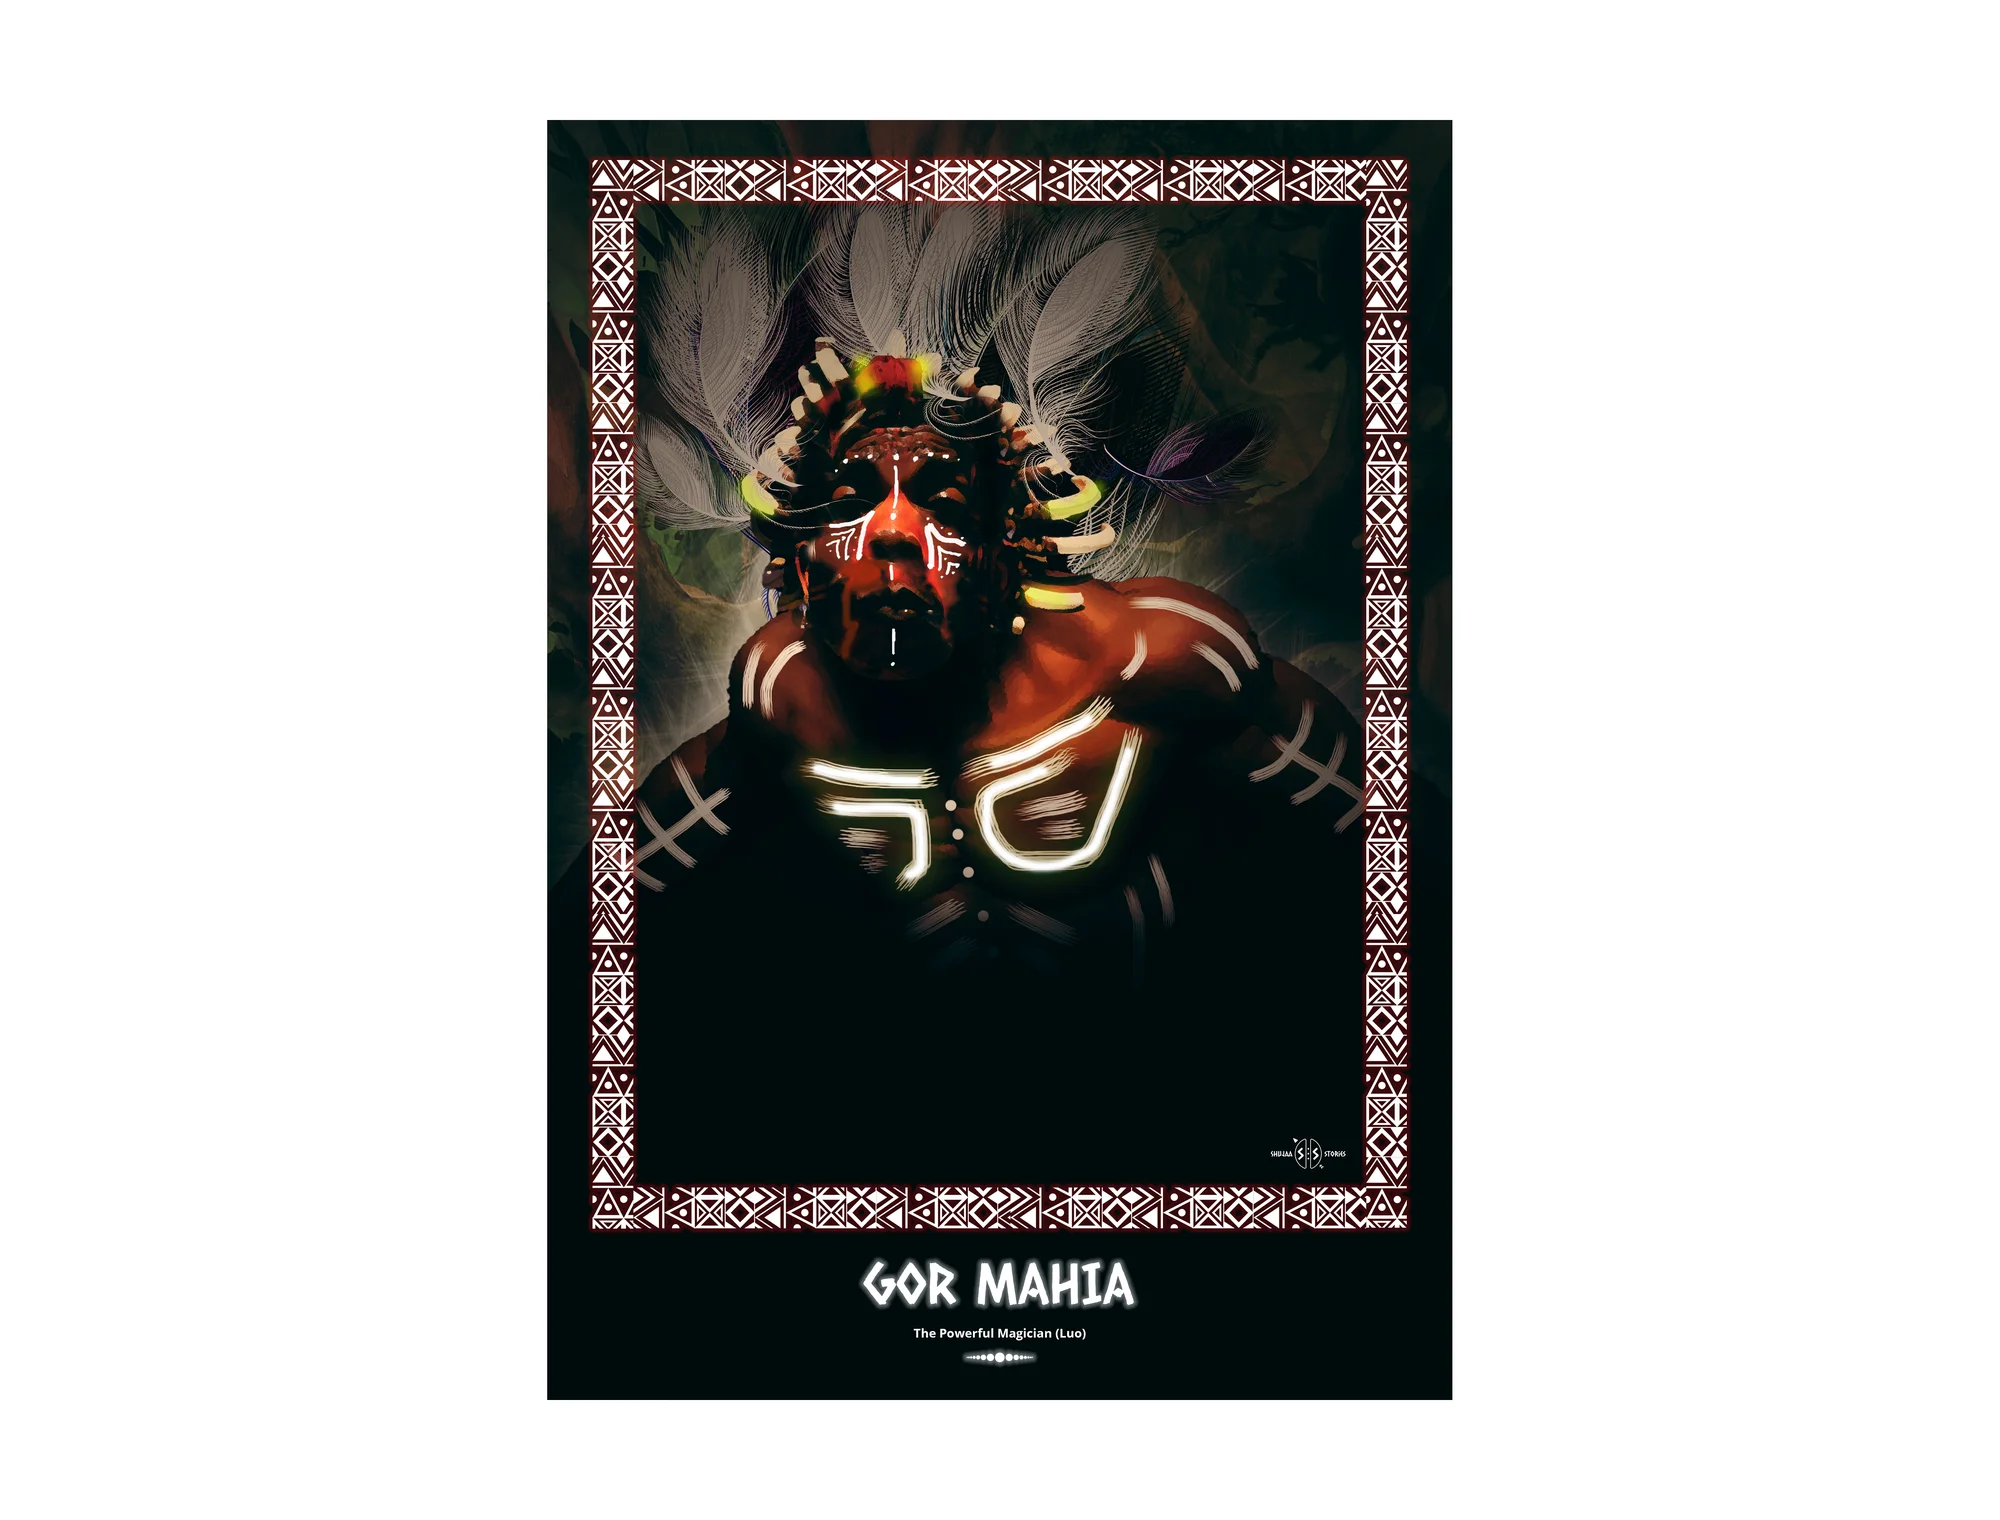 Gor Mahia: The Powerful Magician (Luo community) - National Museums of Kenya and Shujaa Stories